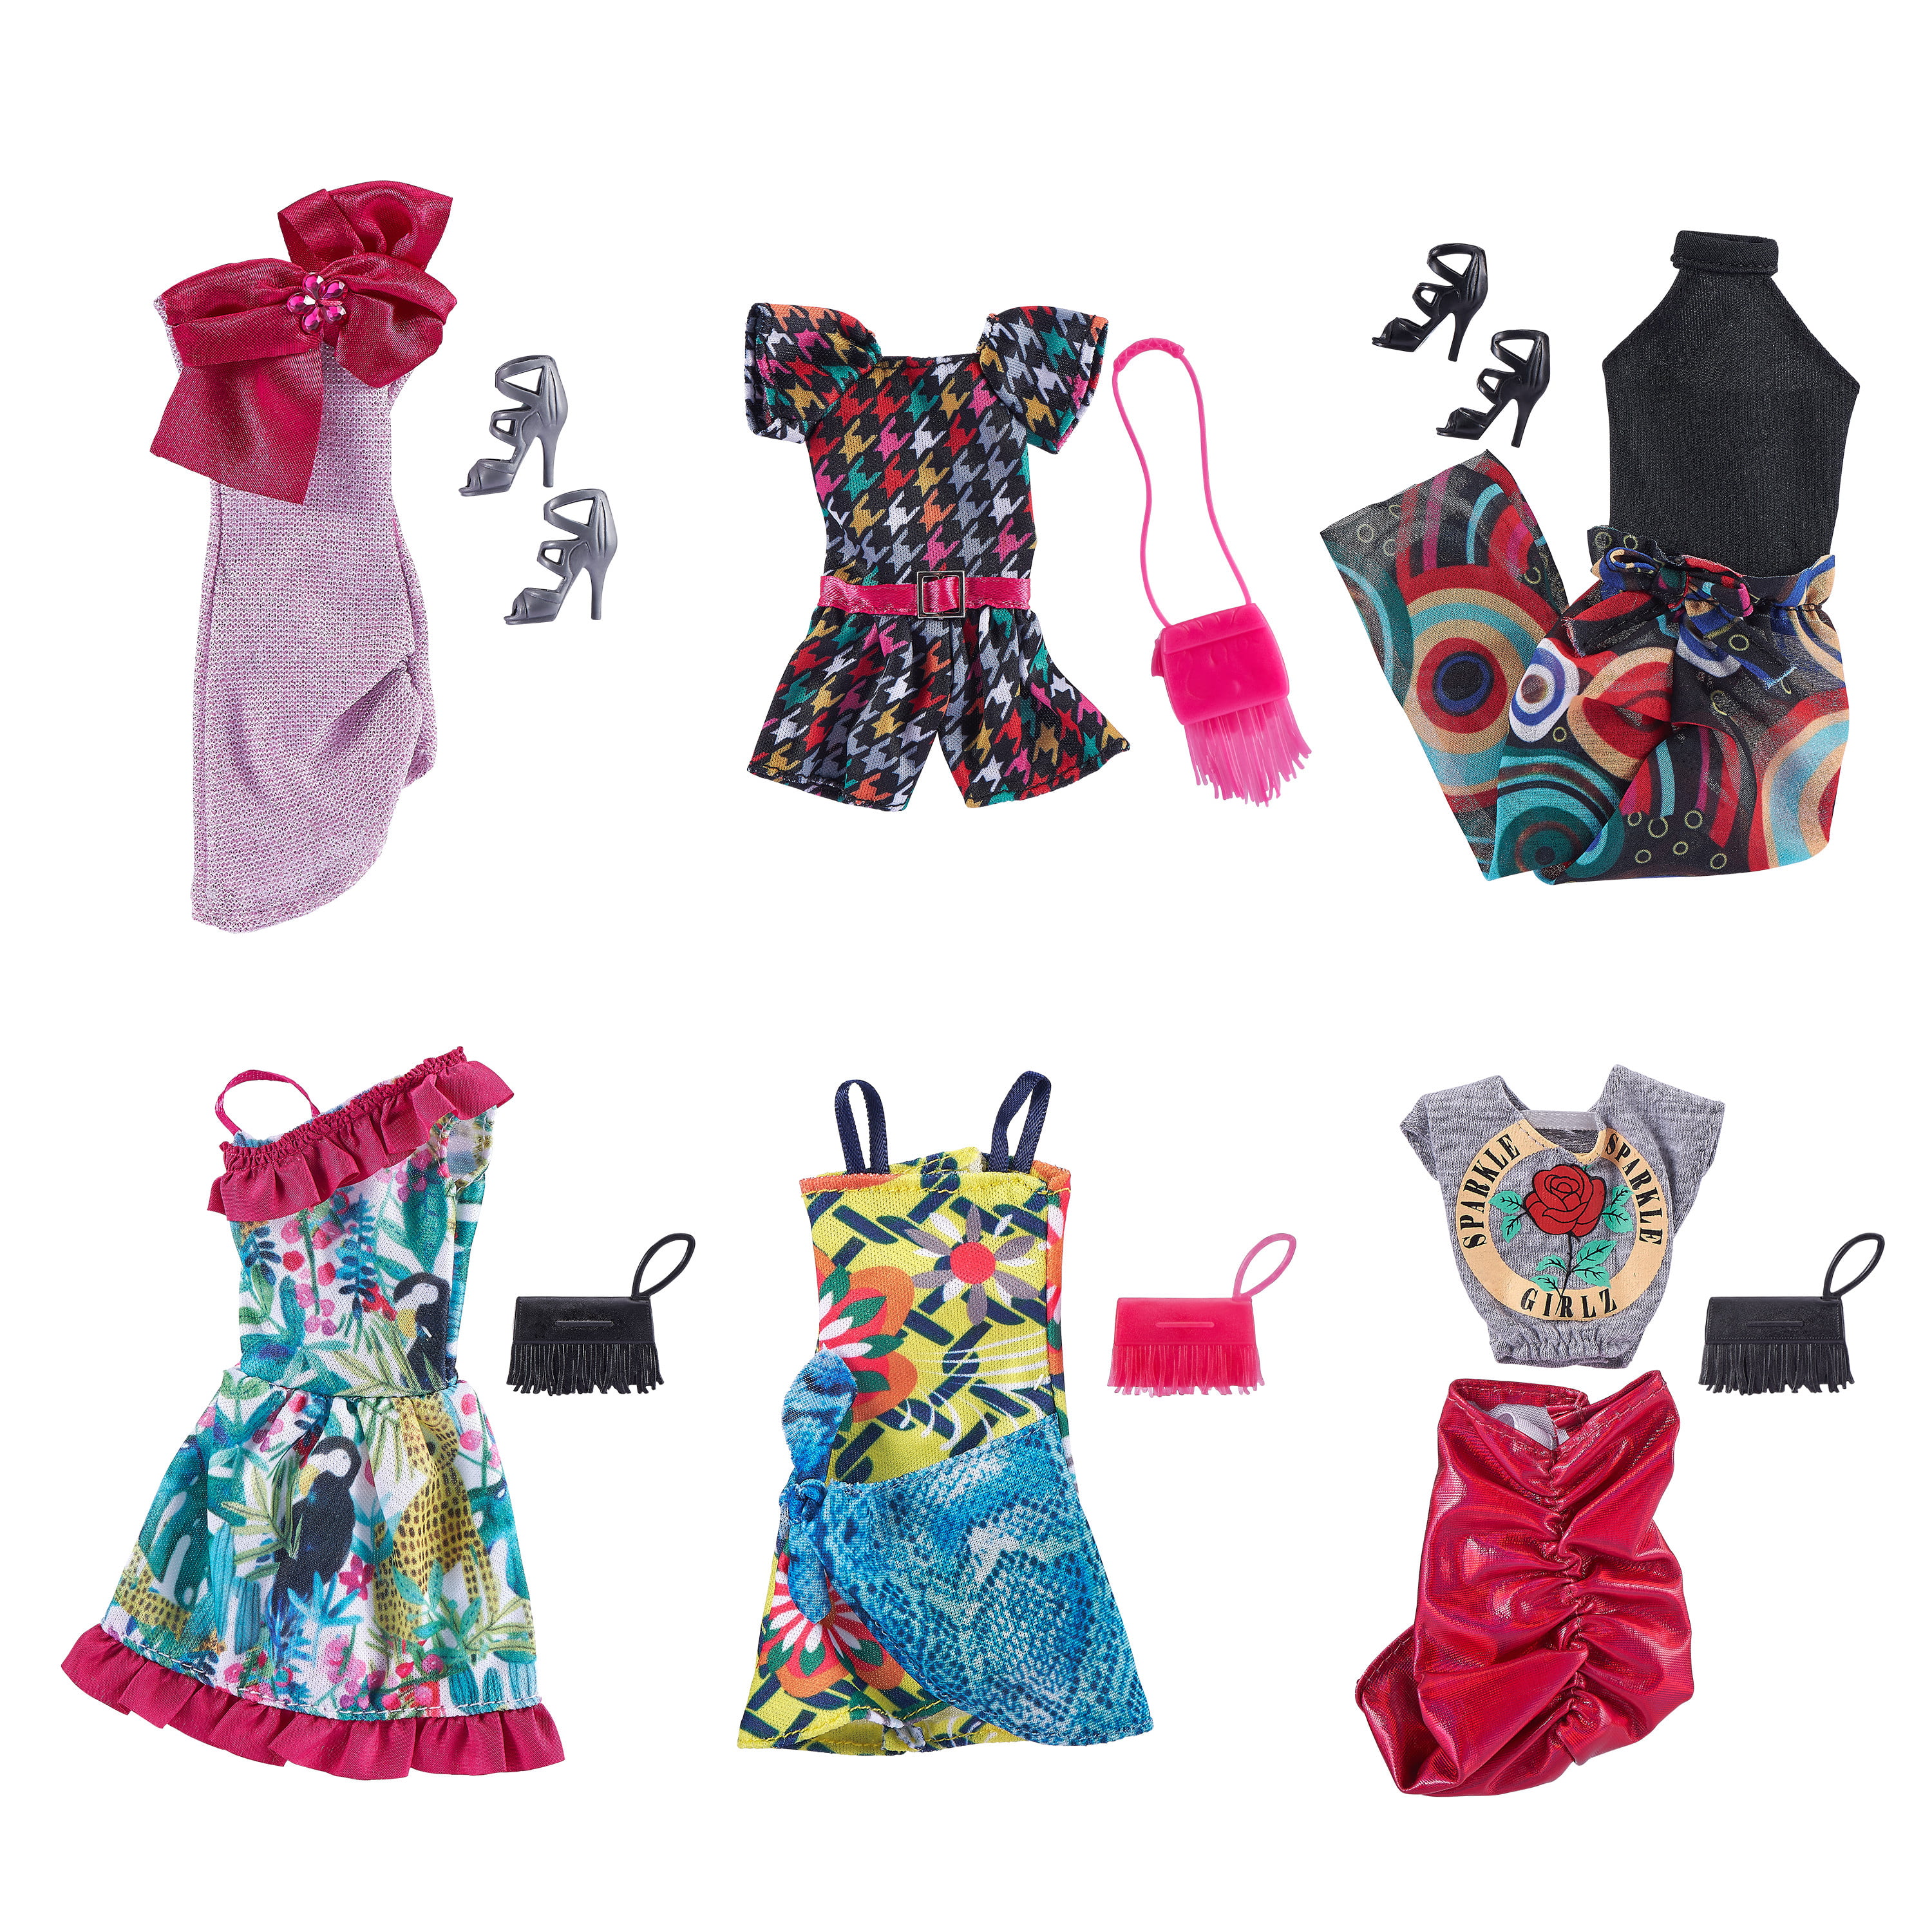 Anyone ever run across these Zuru Sparkle Girlz fashion packs? : r/Dolls